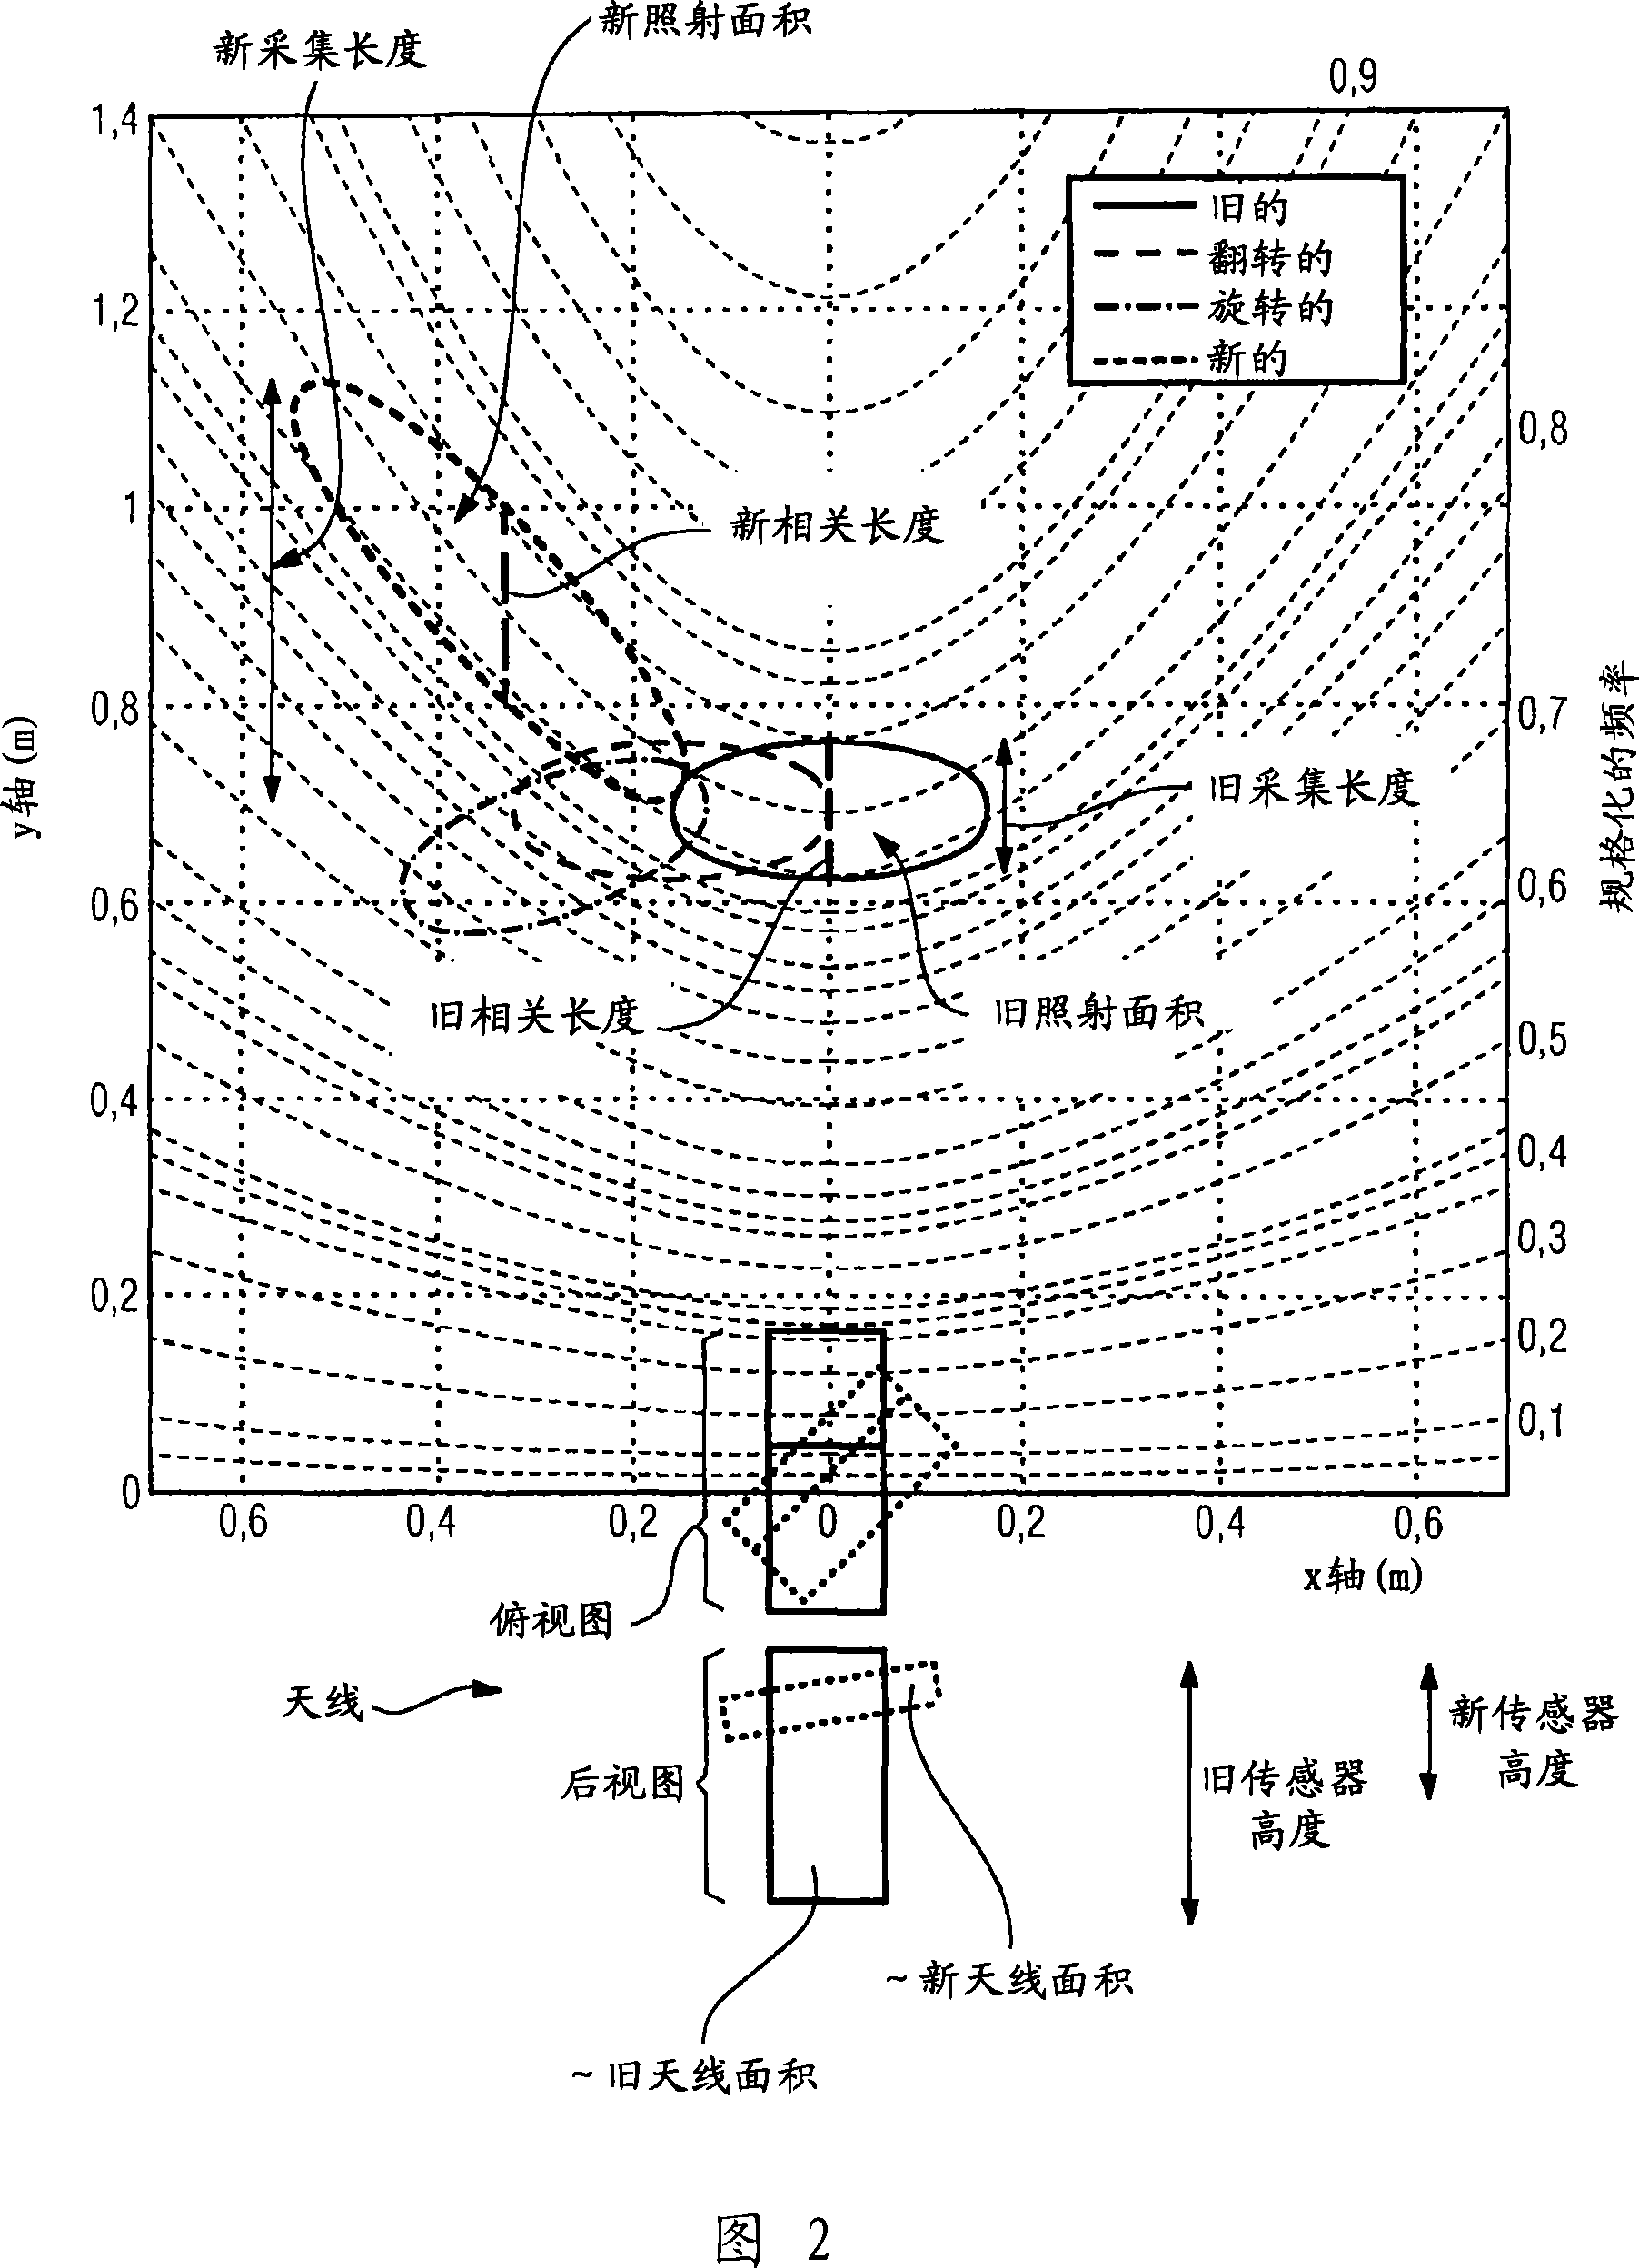 Method for increasing precision of doppler radar sensor